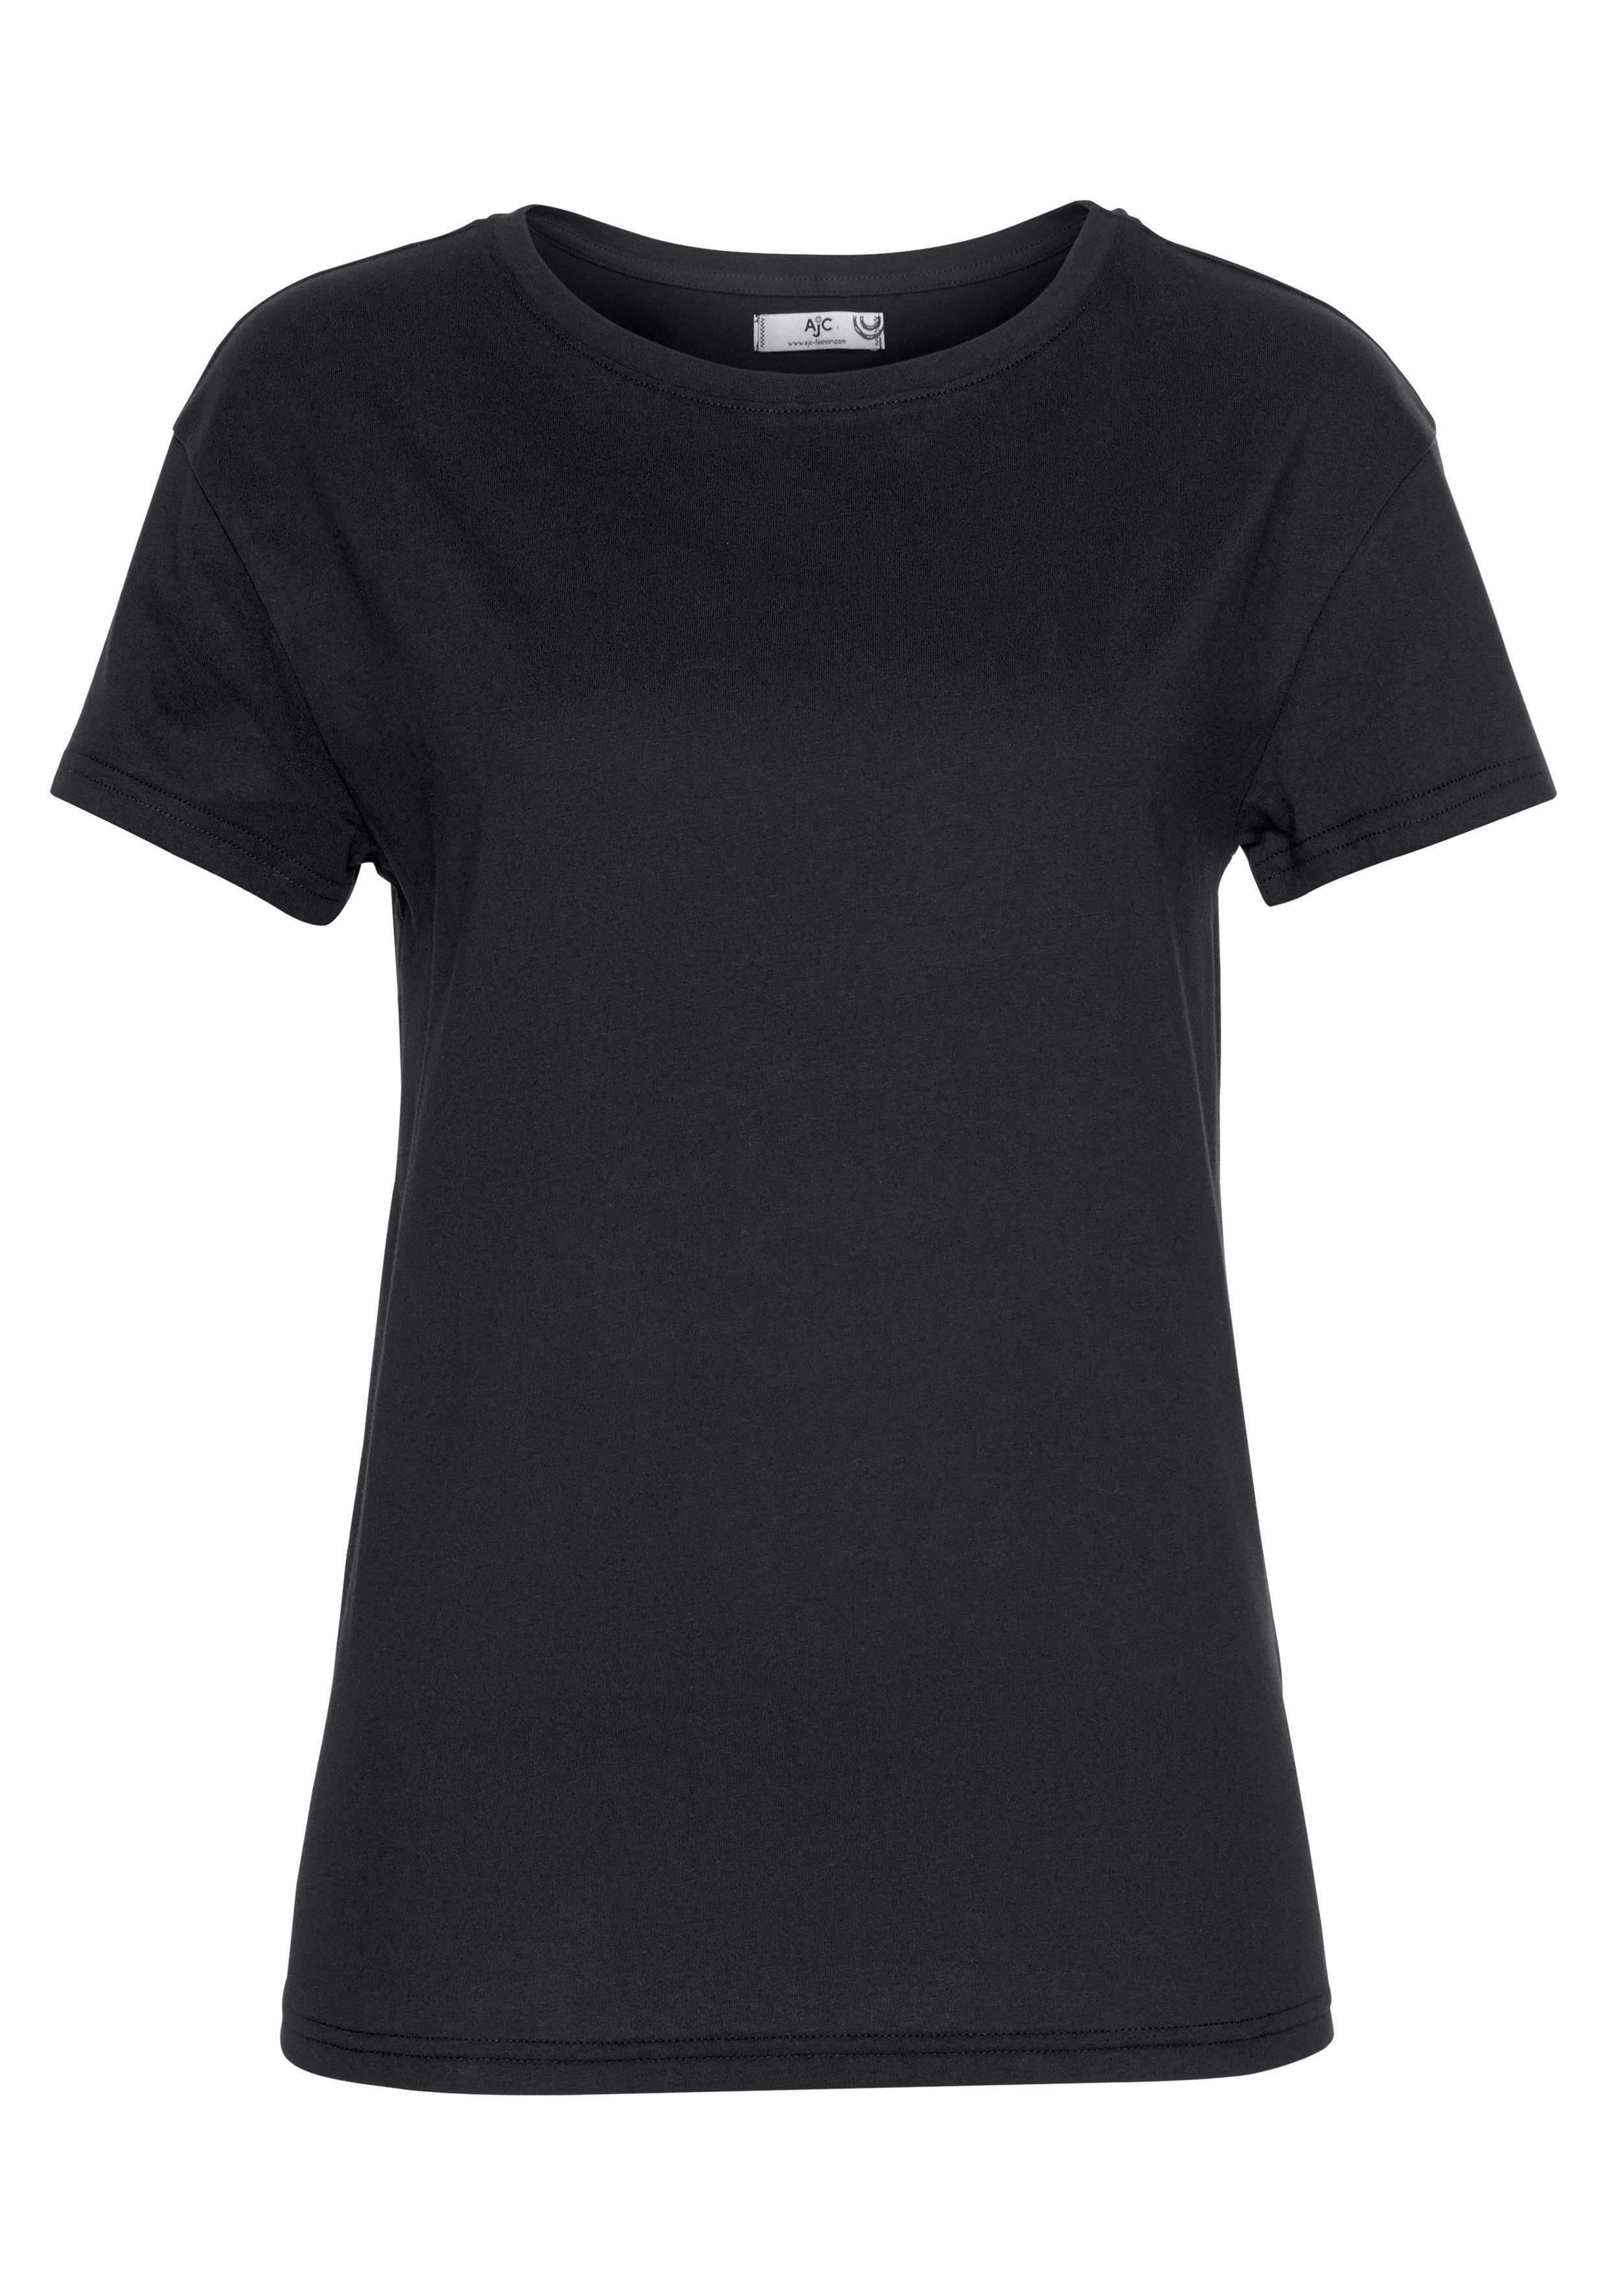 T-Shirt Oversized-Look schwarz - im trendigen NEUE AJC KOLLEKTION